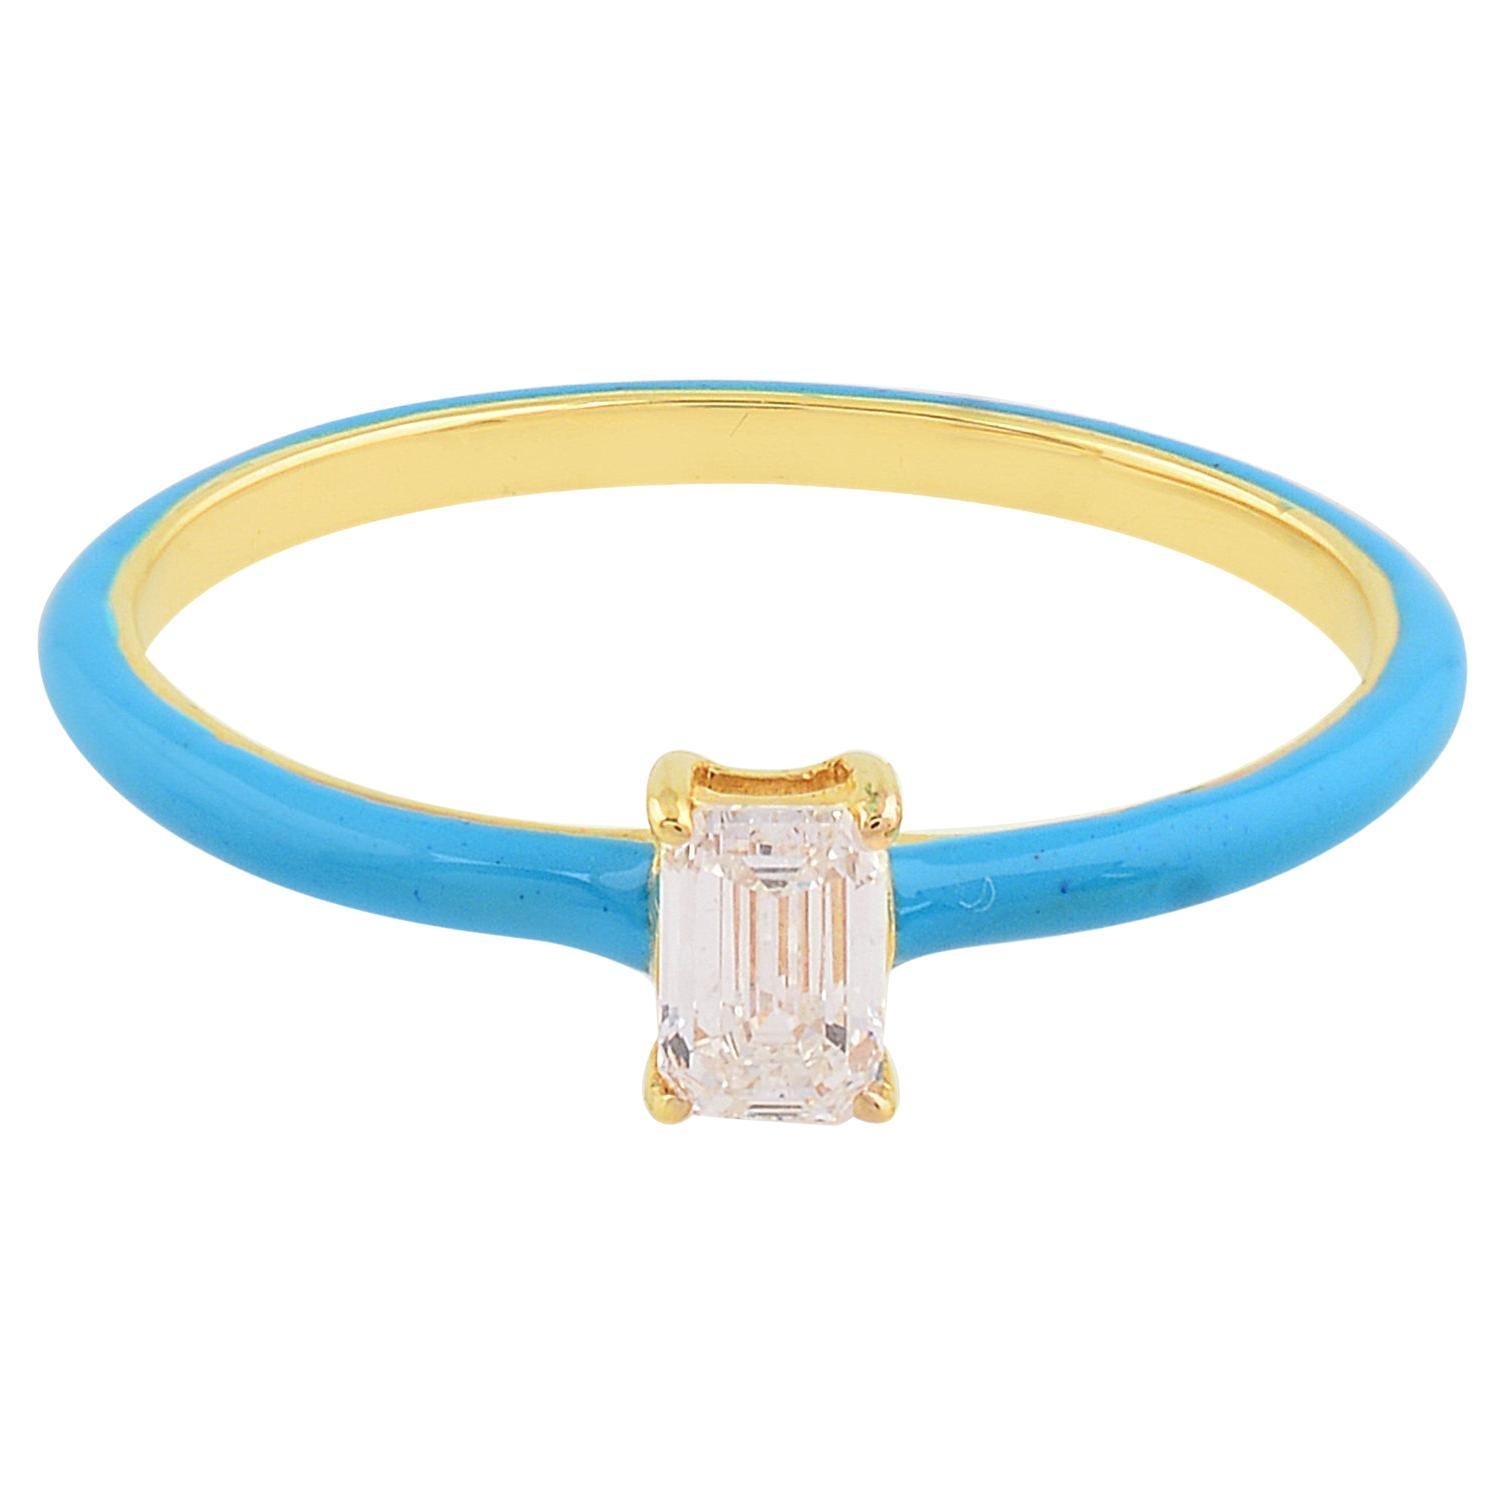 Emerald Cut Diamond Ring 14k Yellow Gold Turquoise Color Enamel Handmade Jewelry